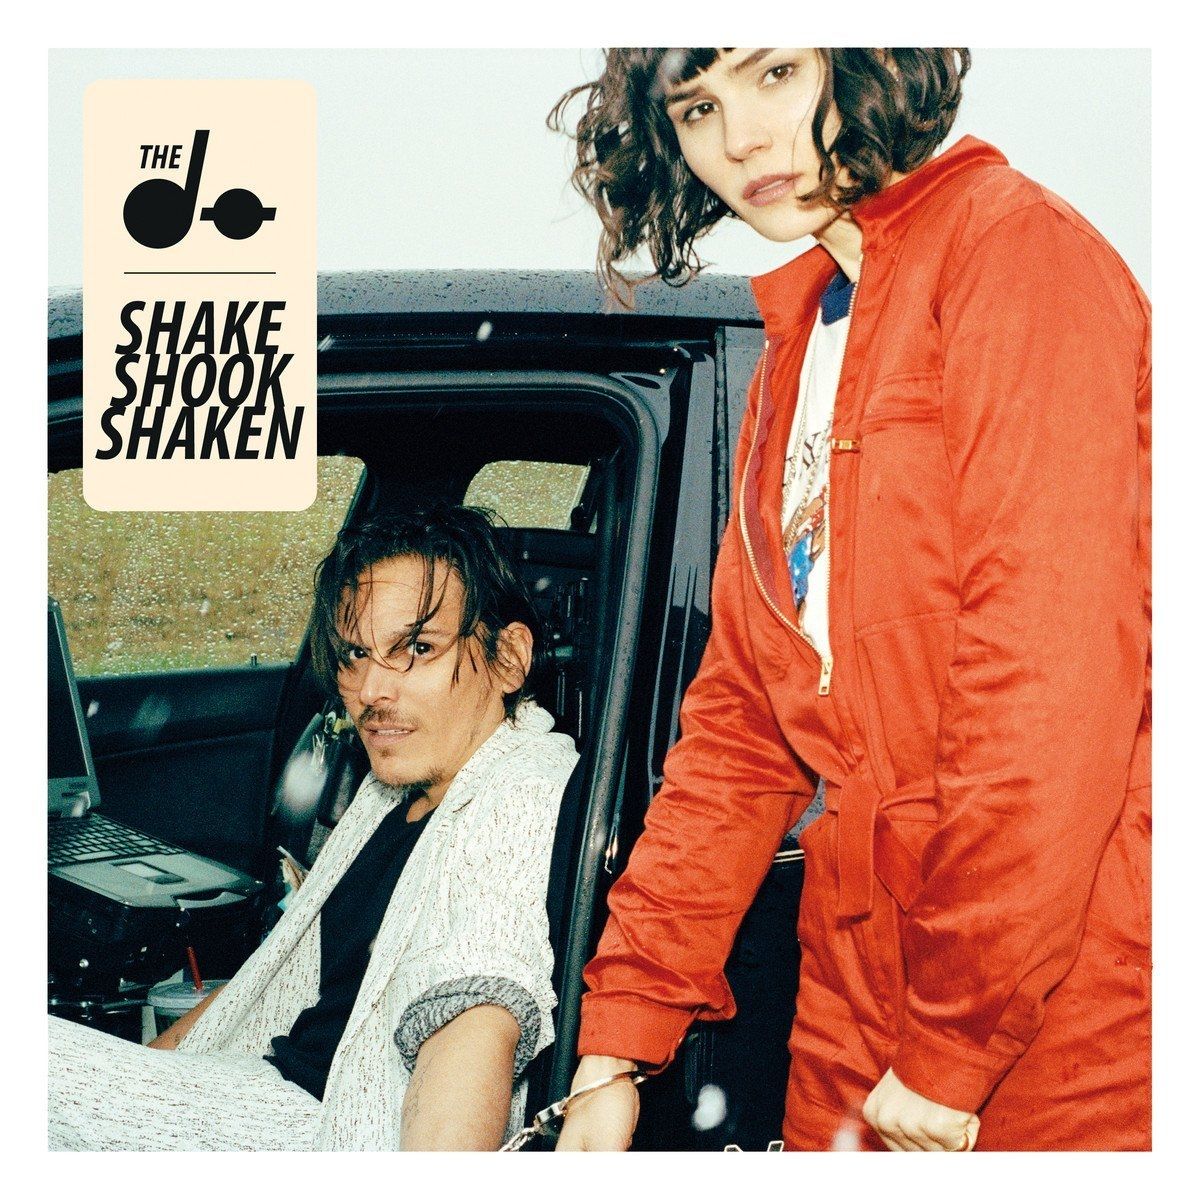 Imagem do álbum Shake Shook Shaken  do(a) artista The Do